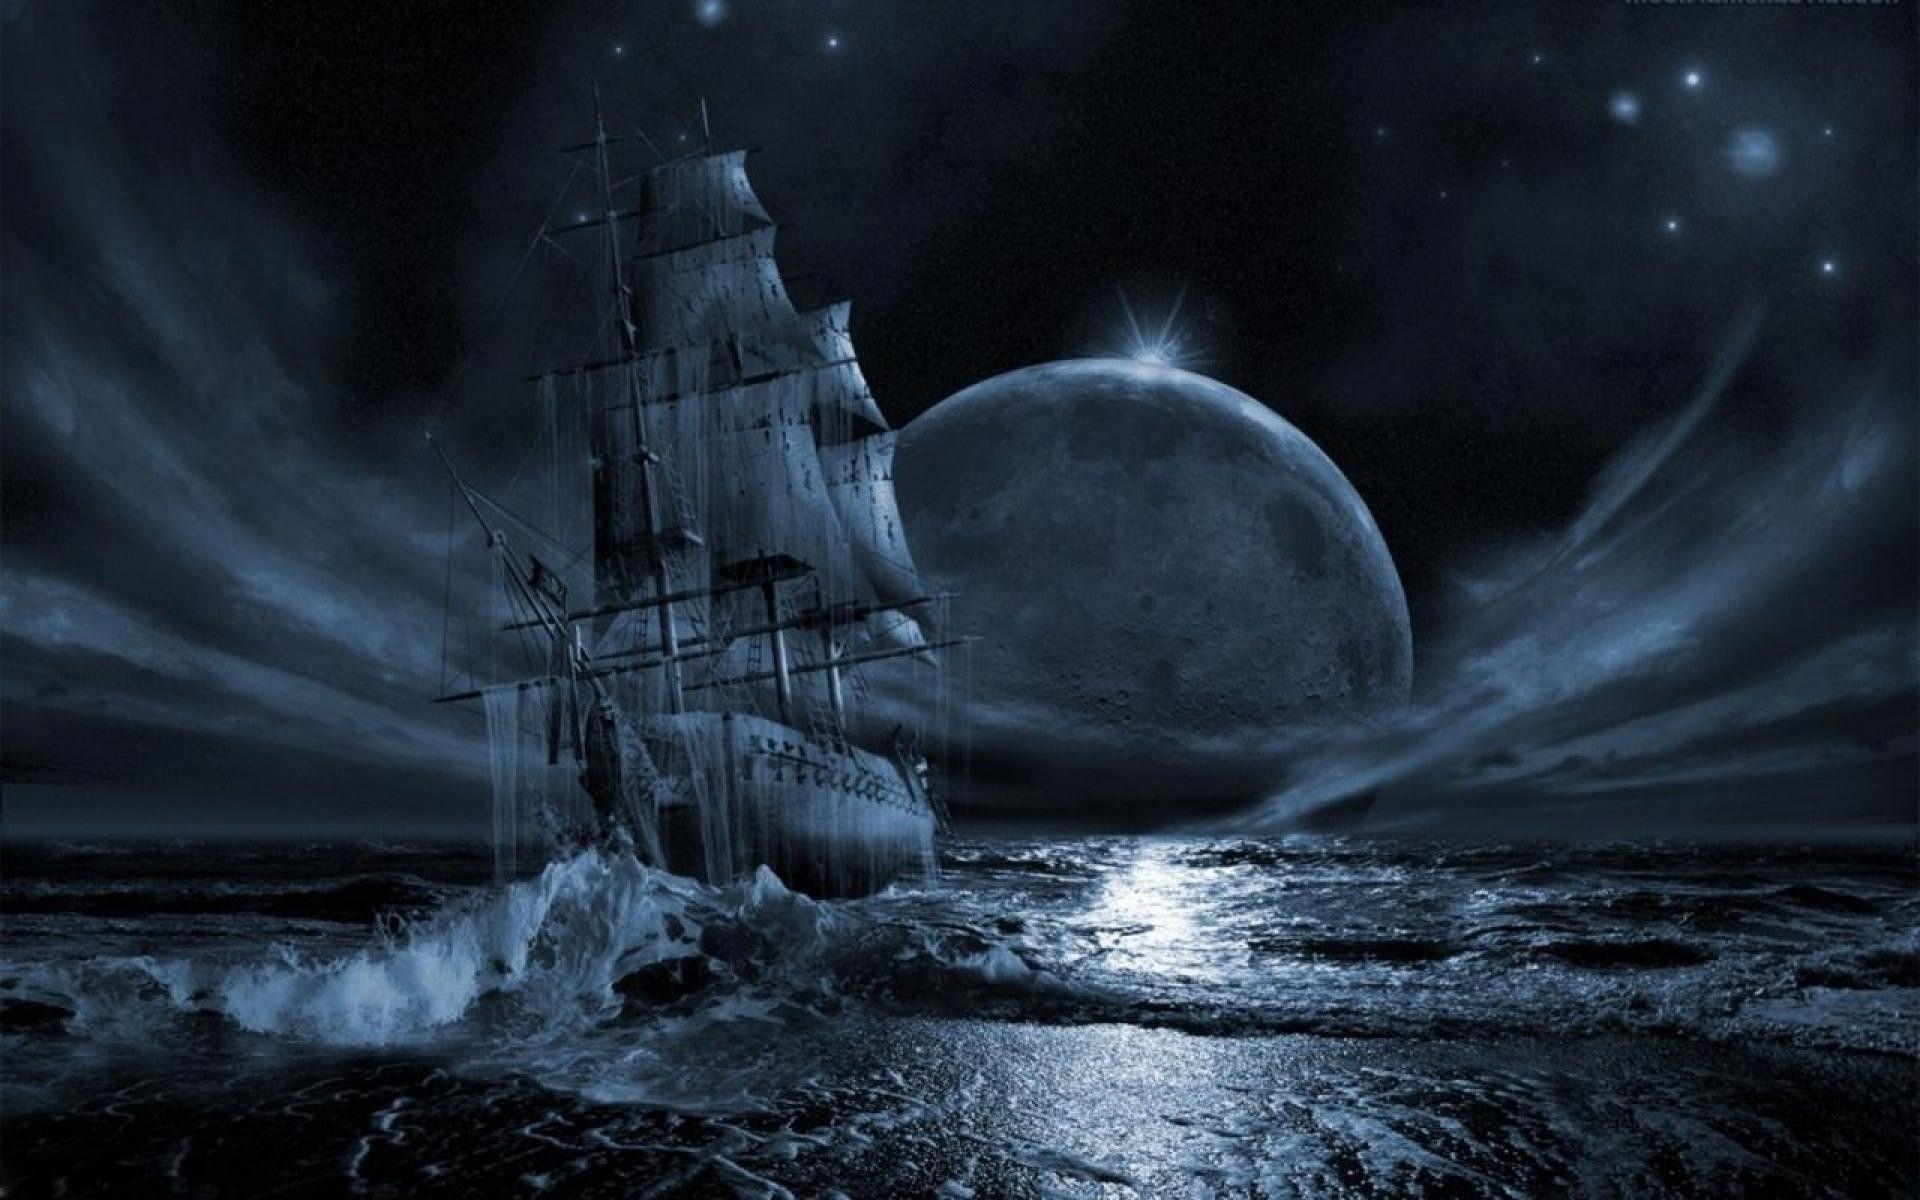 barco fantasma de piratas